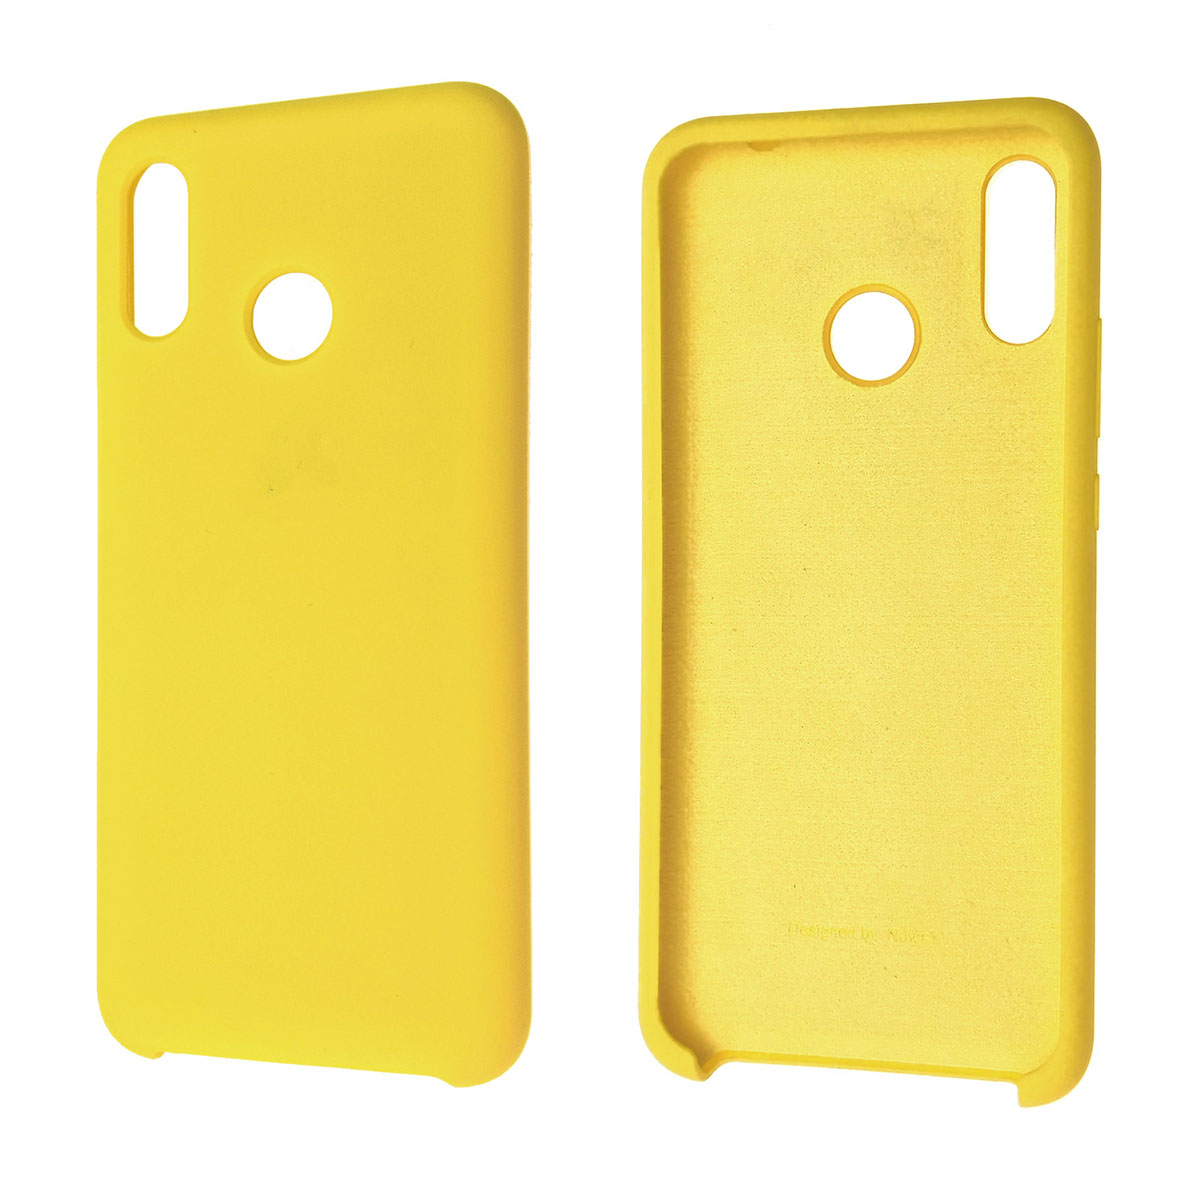 Чехол накладка Silicon Cover для HUAWEI Nova 3, силикон, бархат, цвет желтый.